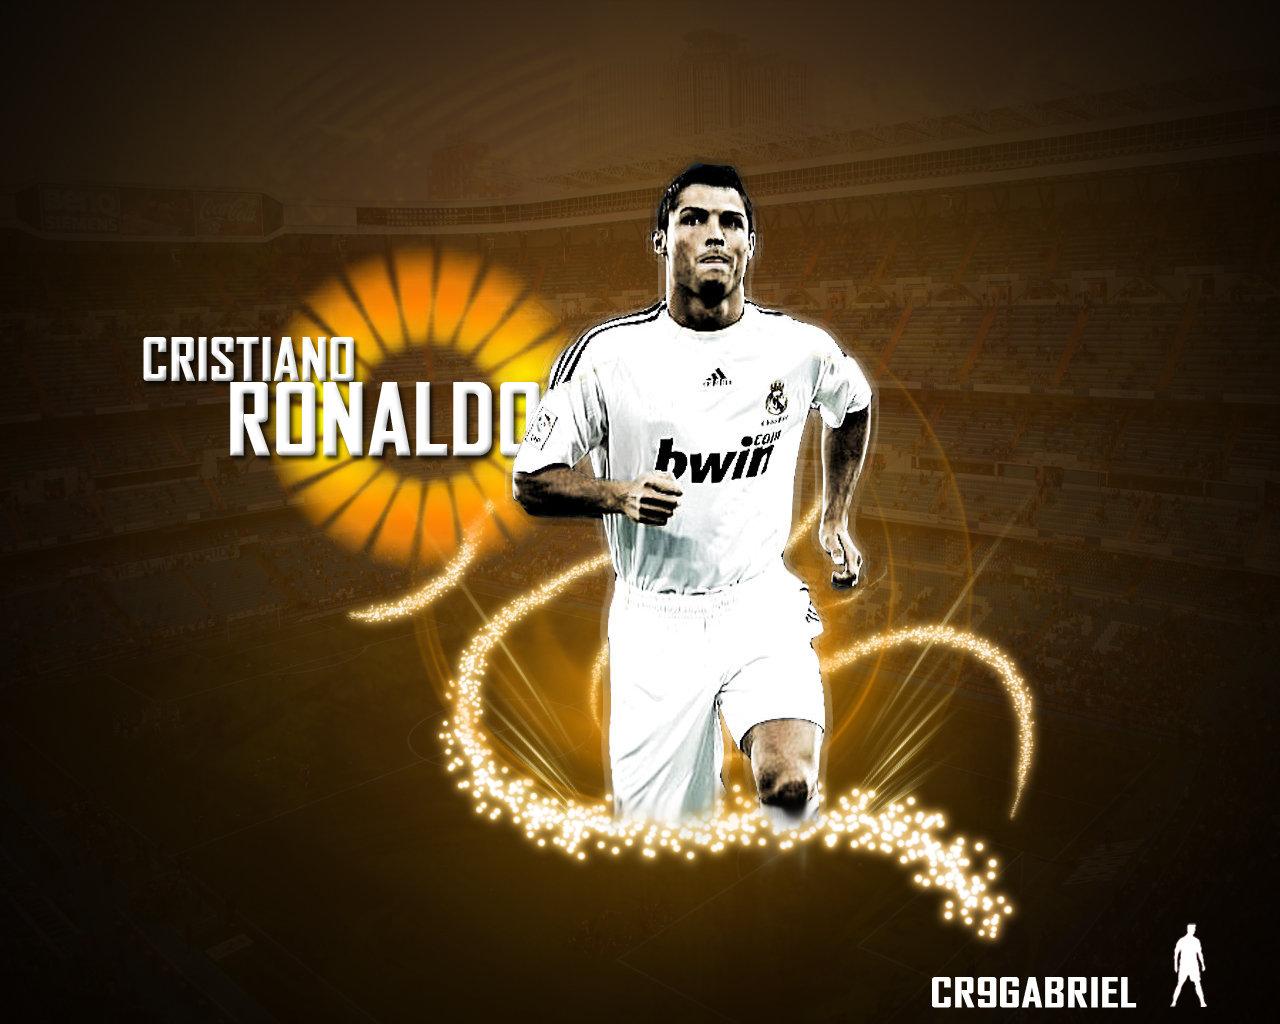 Wallpaper Cristiano Ronaldo Real Madrid Alojamiento De Im Genes